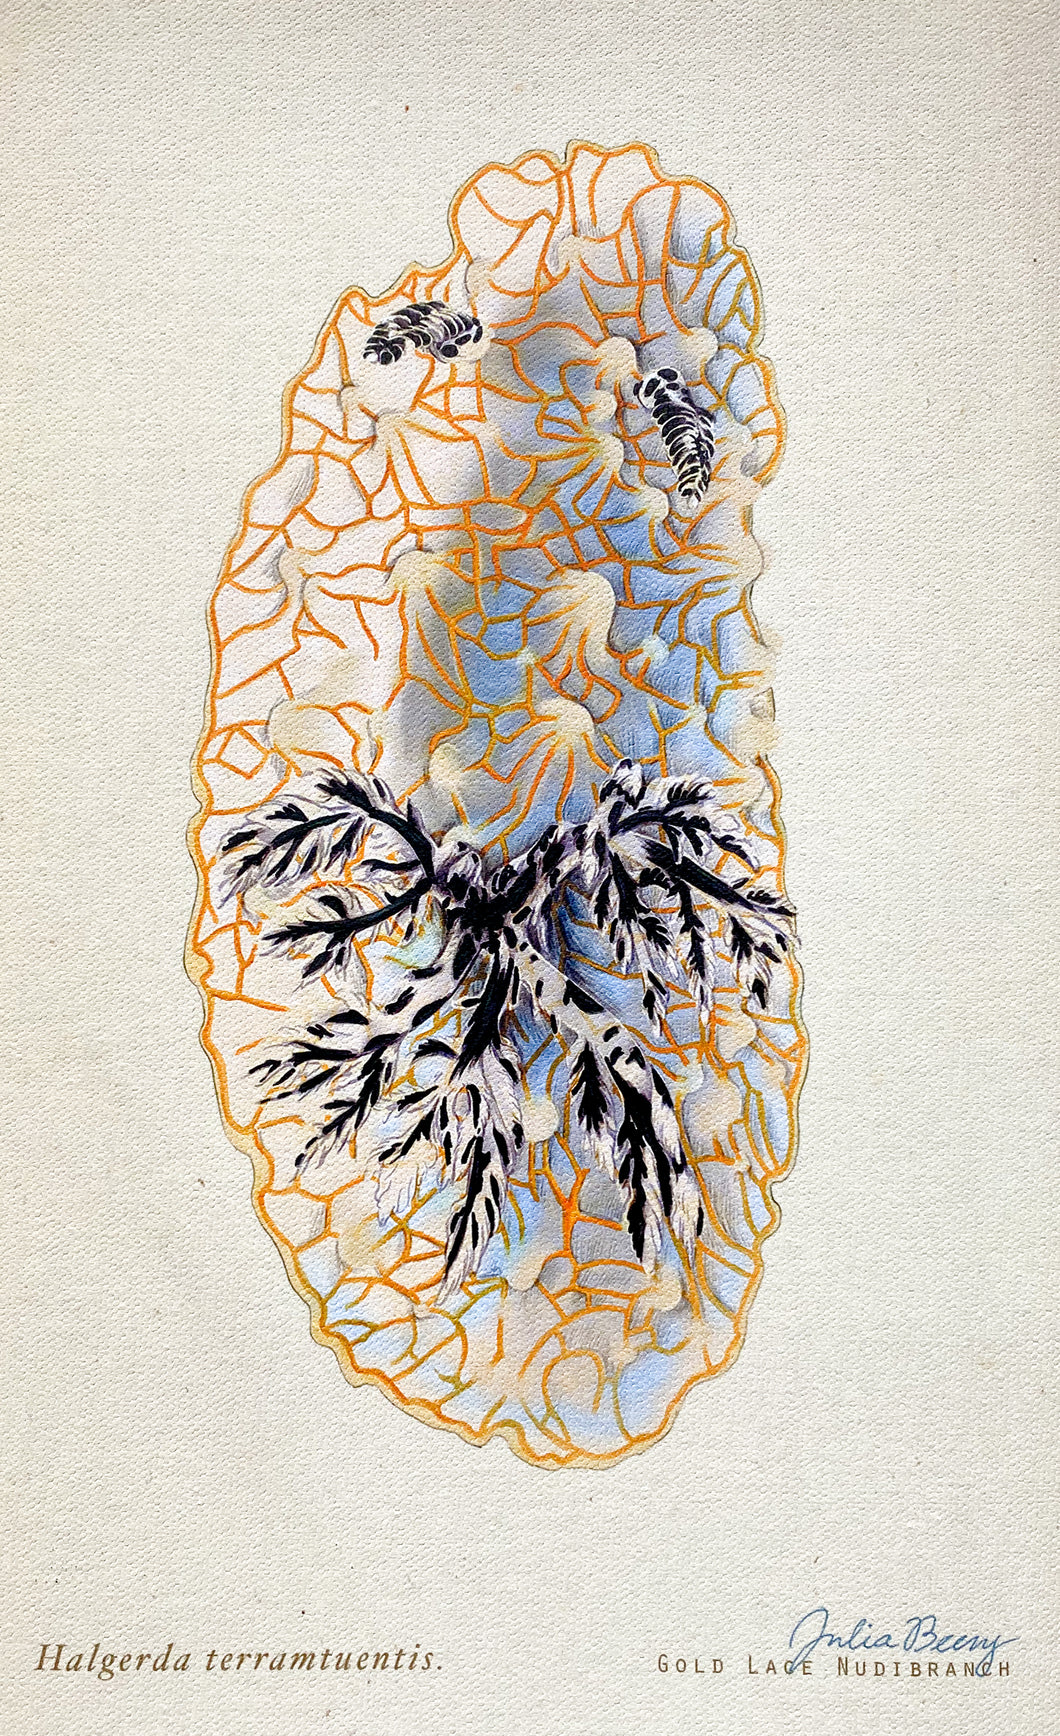 Golden Lace Nudibranch (Halgerda terramtuentis) Giclée Print